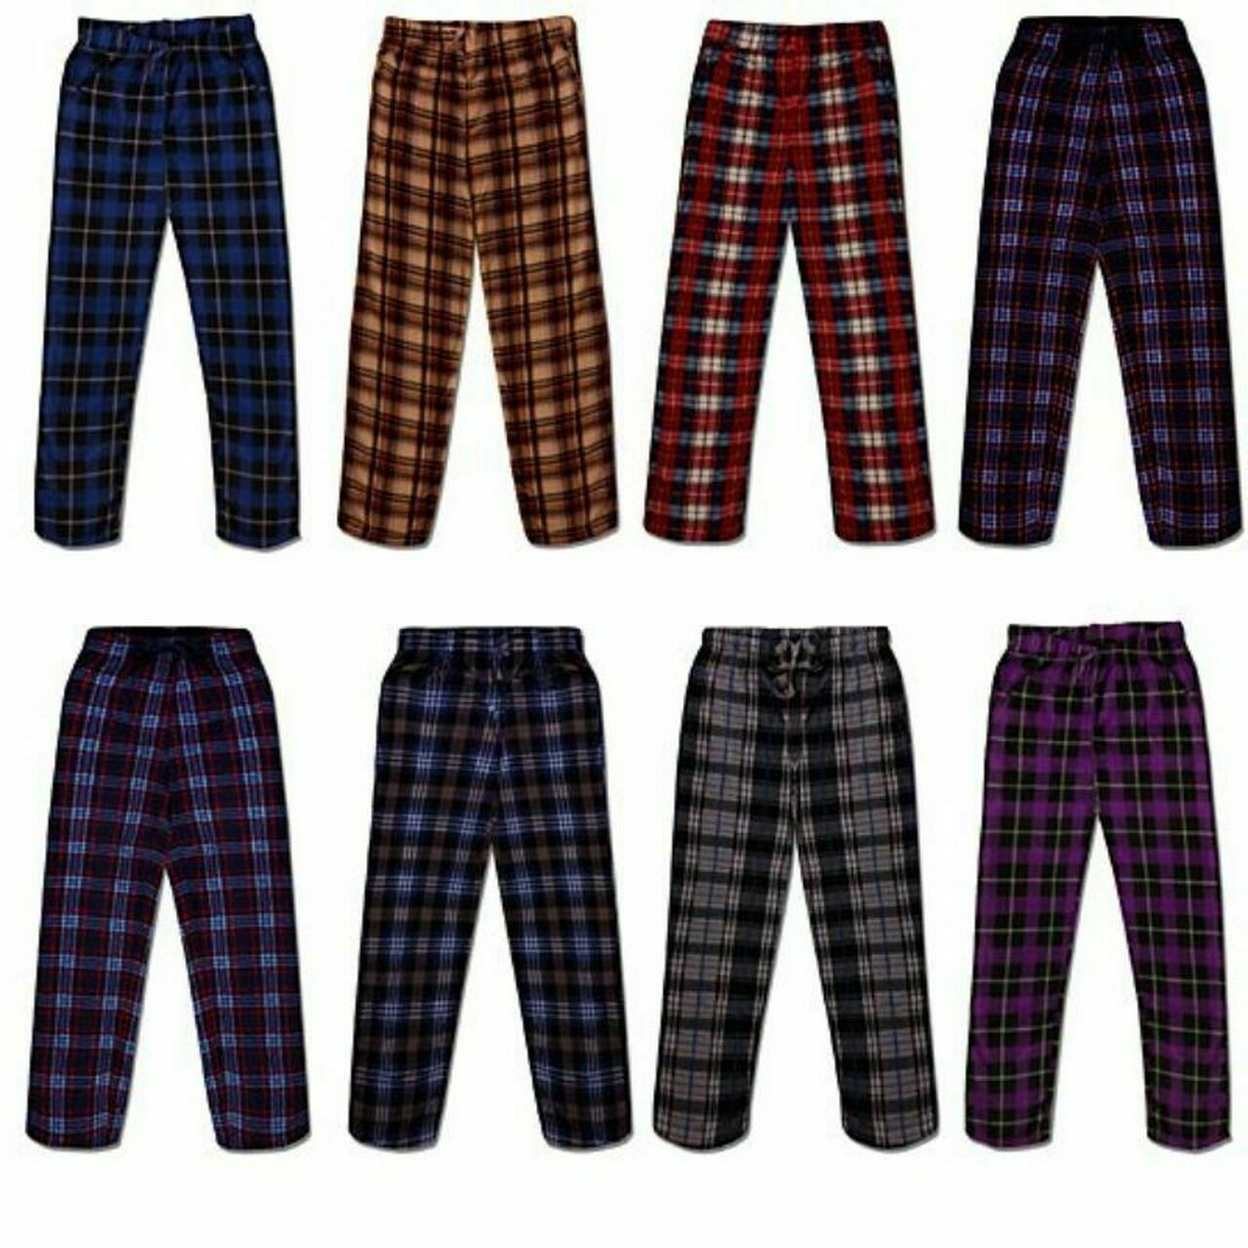 2-Pack: Men's Ultra Soft Cozy Flannel Fleece Plaid Pajama Sleep Bottom Lounge Pants - Red & Grey, X-large